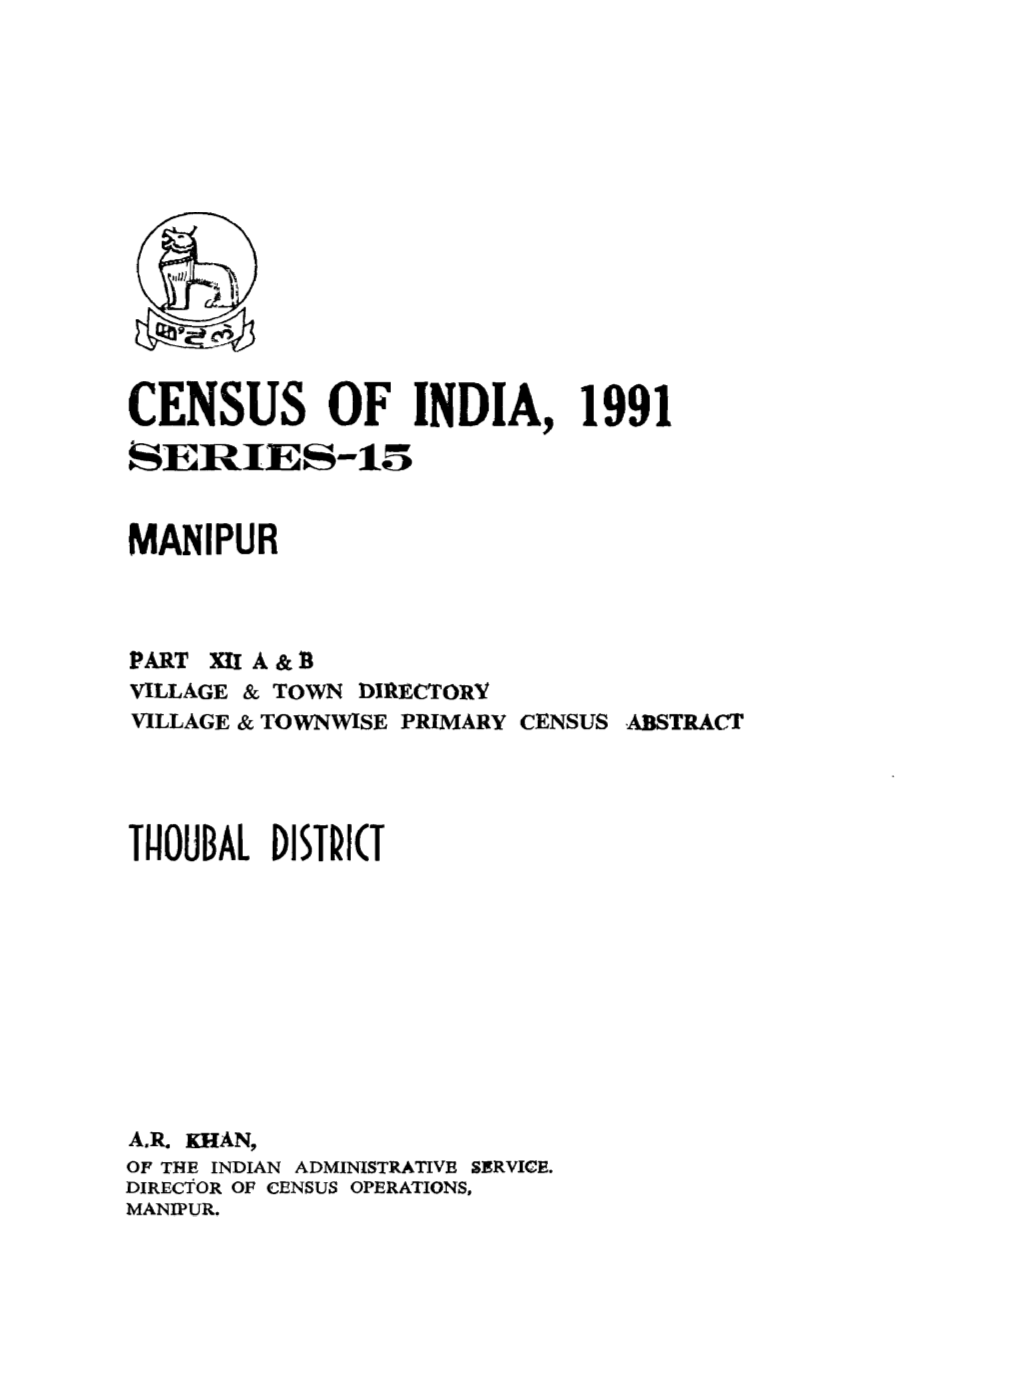 District Census Handbook, Thoubal, Part XII-A & B, Series-15, Manipur